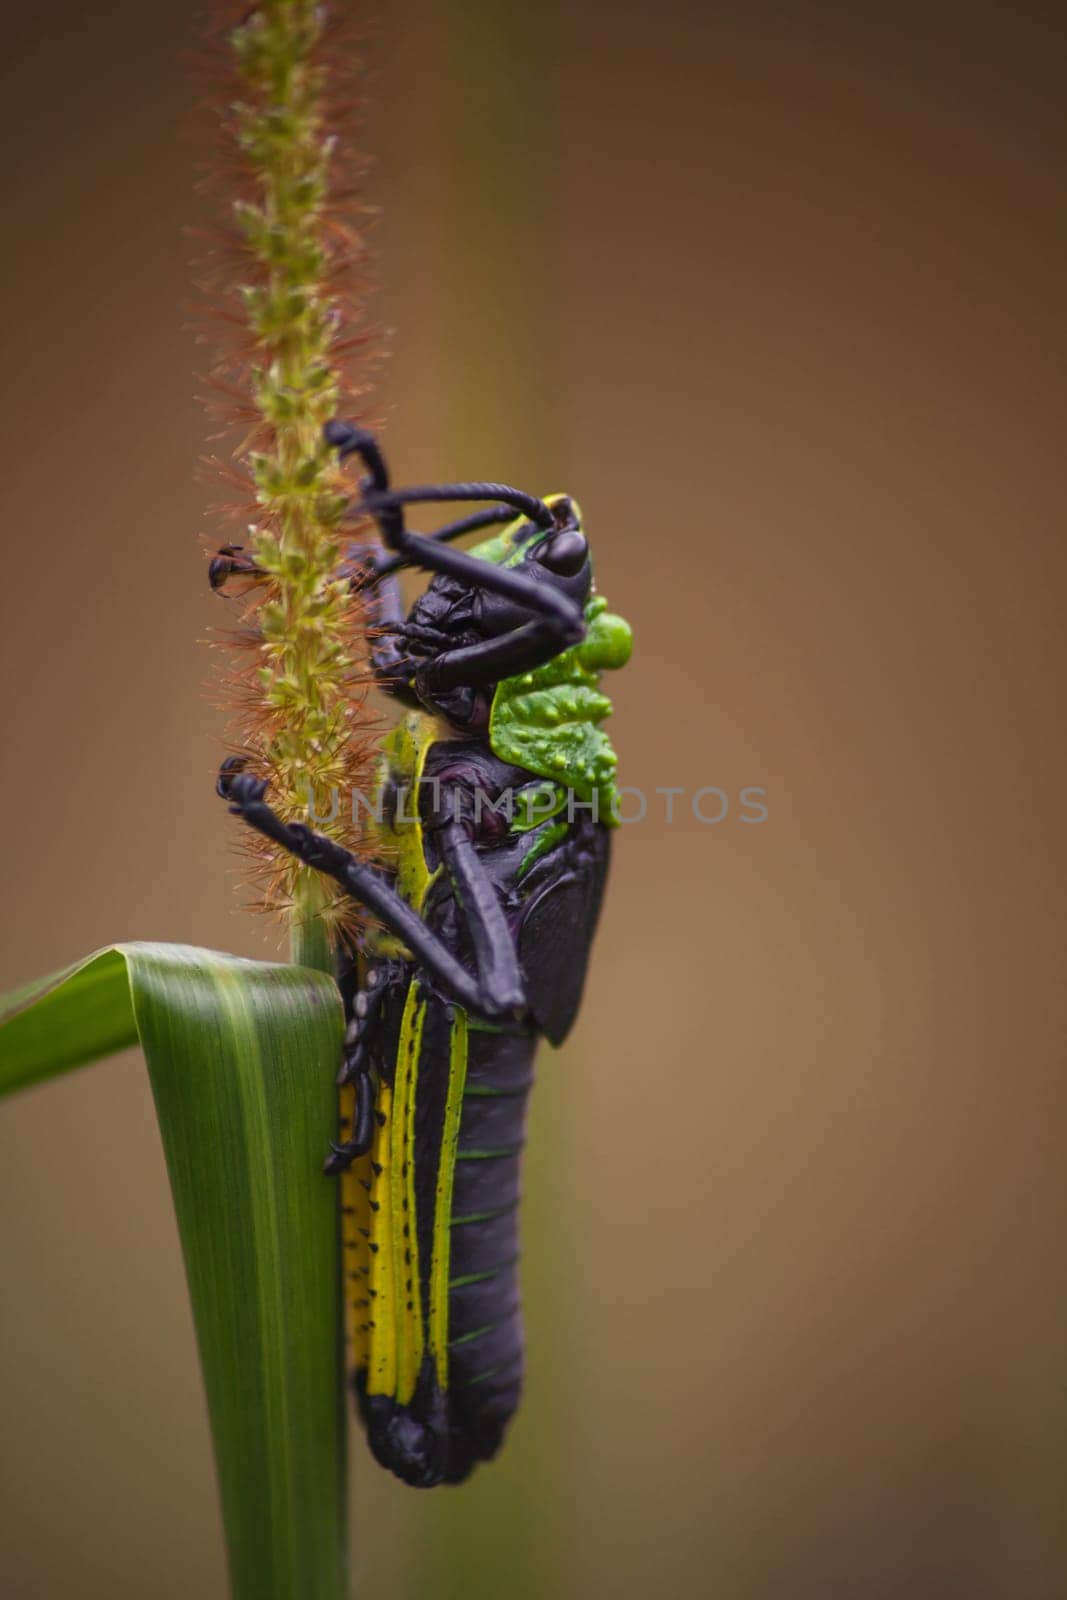 Toxic Milkweed Grasshopper (Phymateus morbillosus) nymph 13926 by kobus_peche